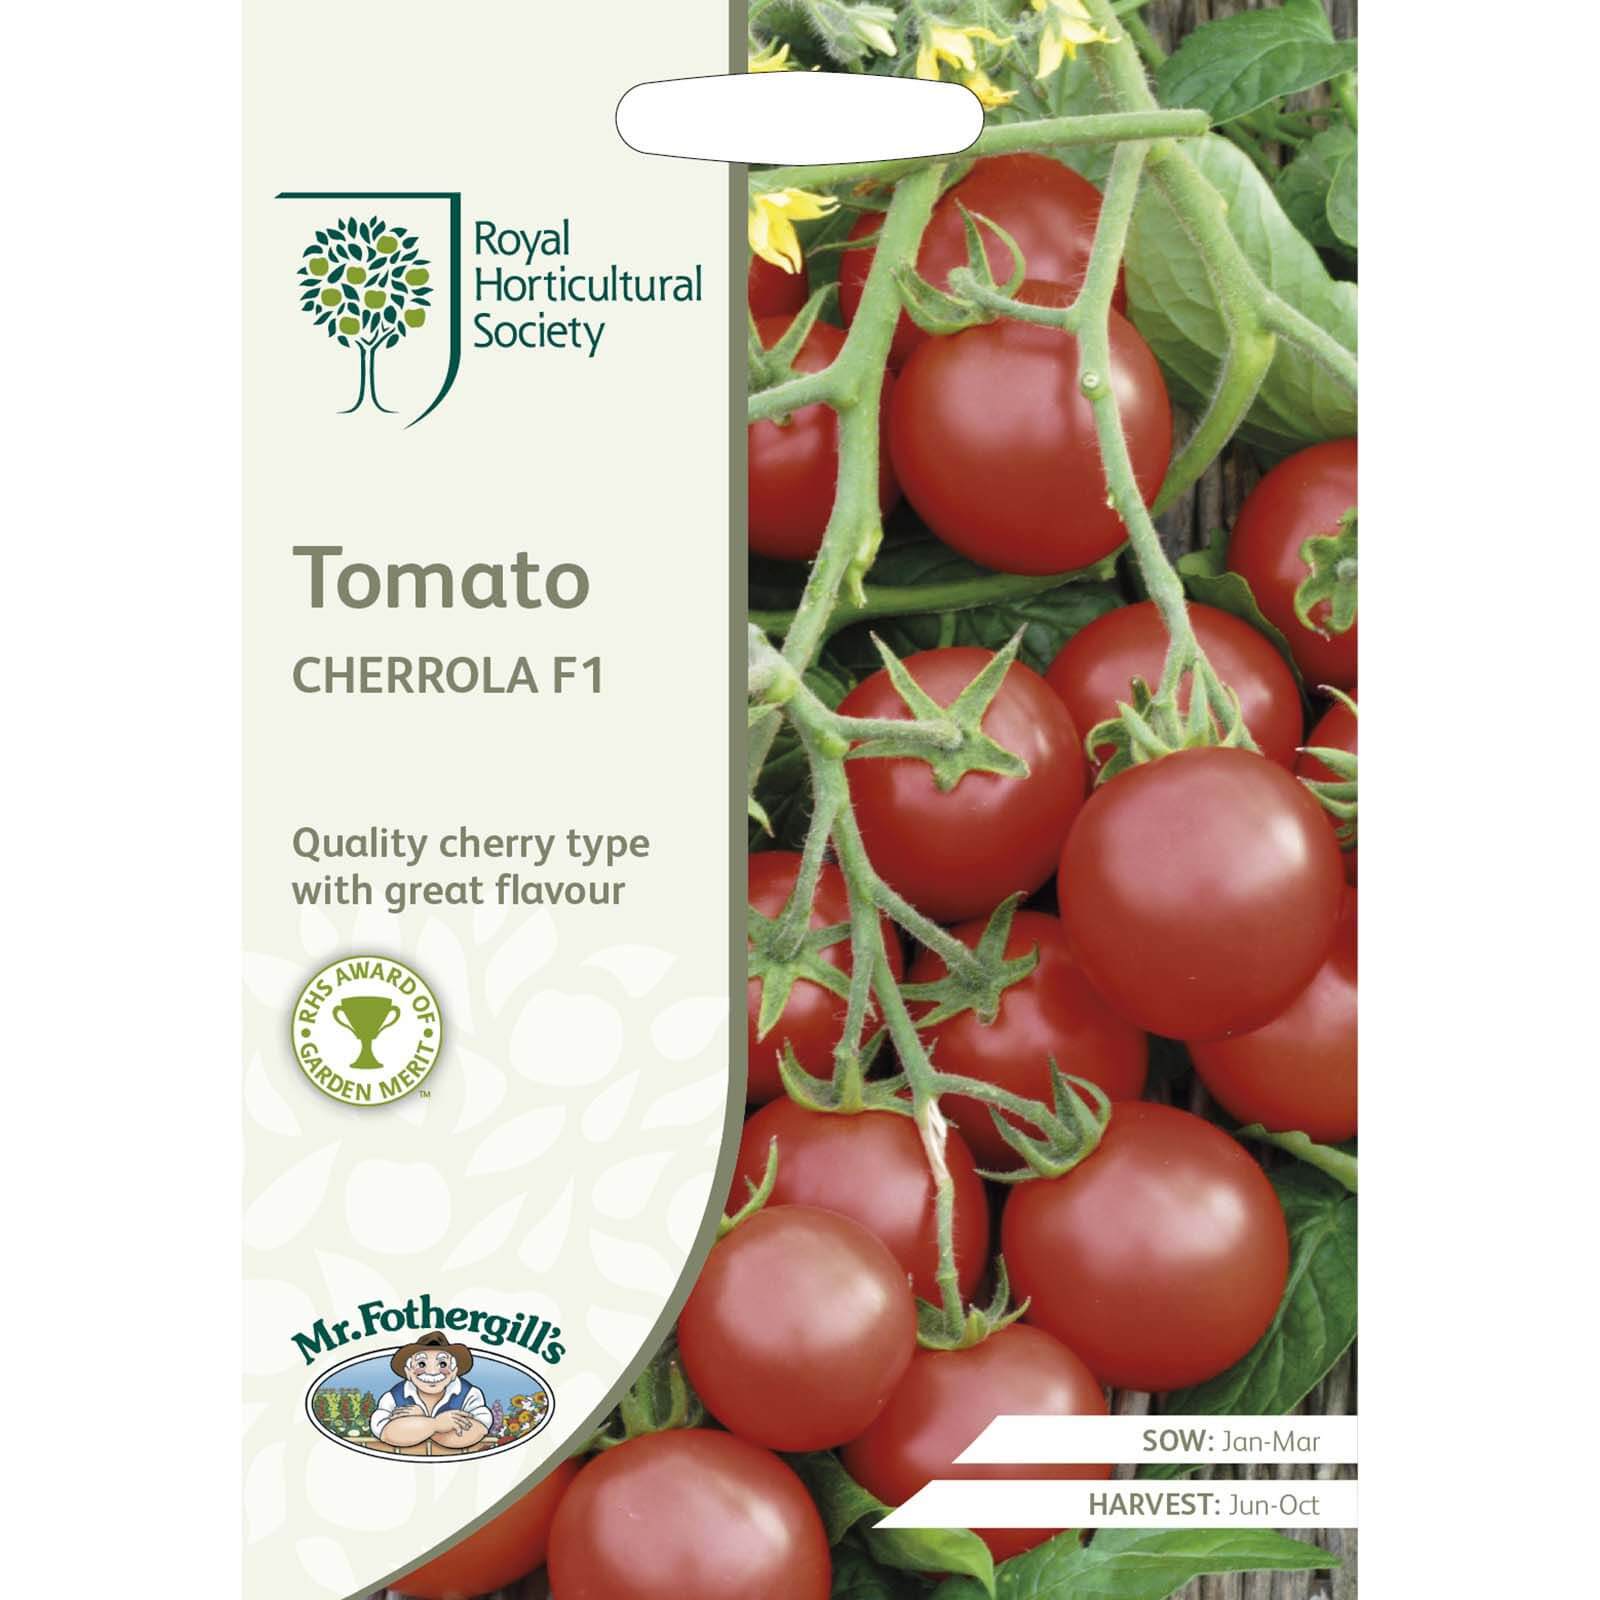 RHS Tomato Cherrola F1 Seeds